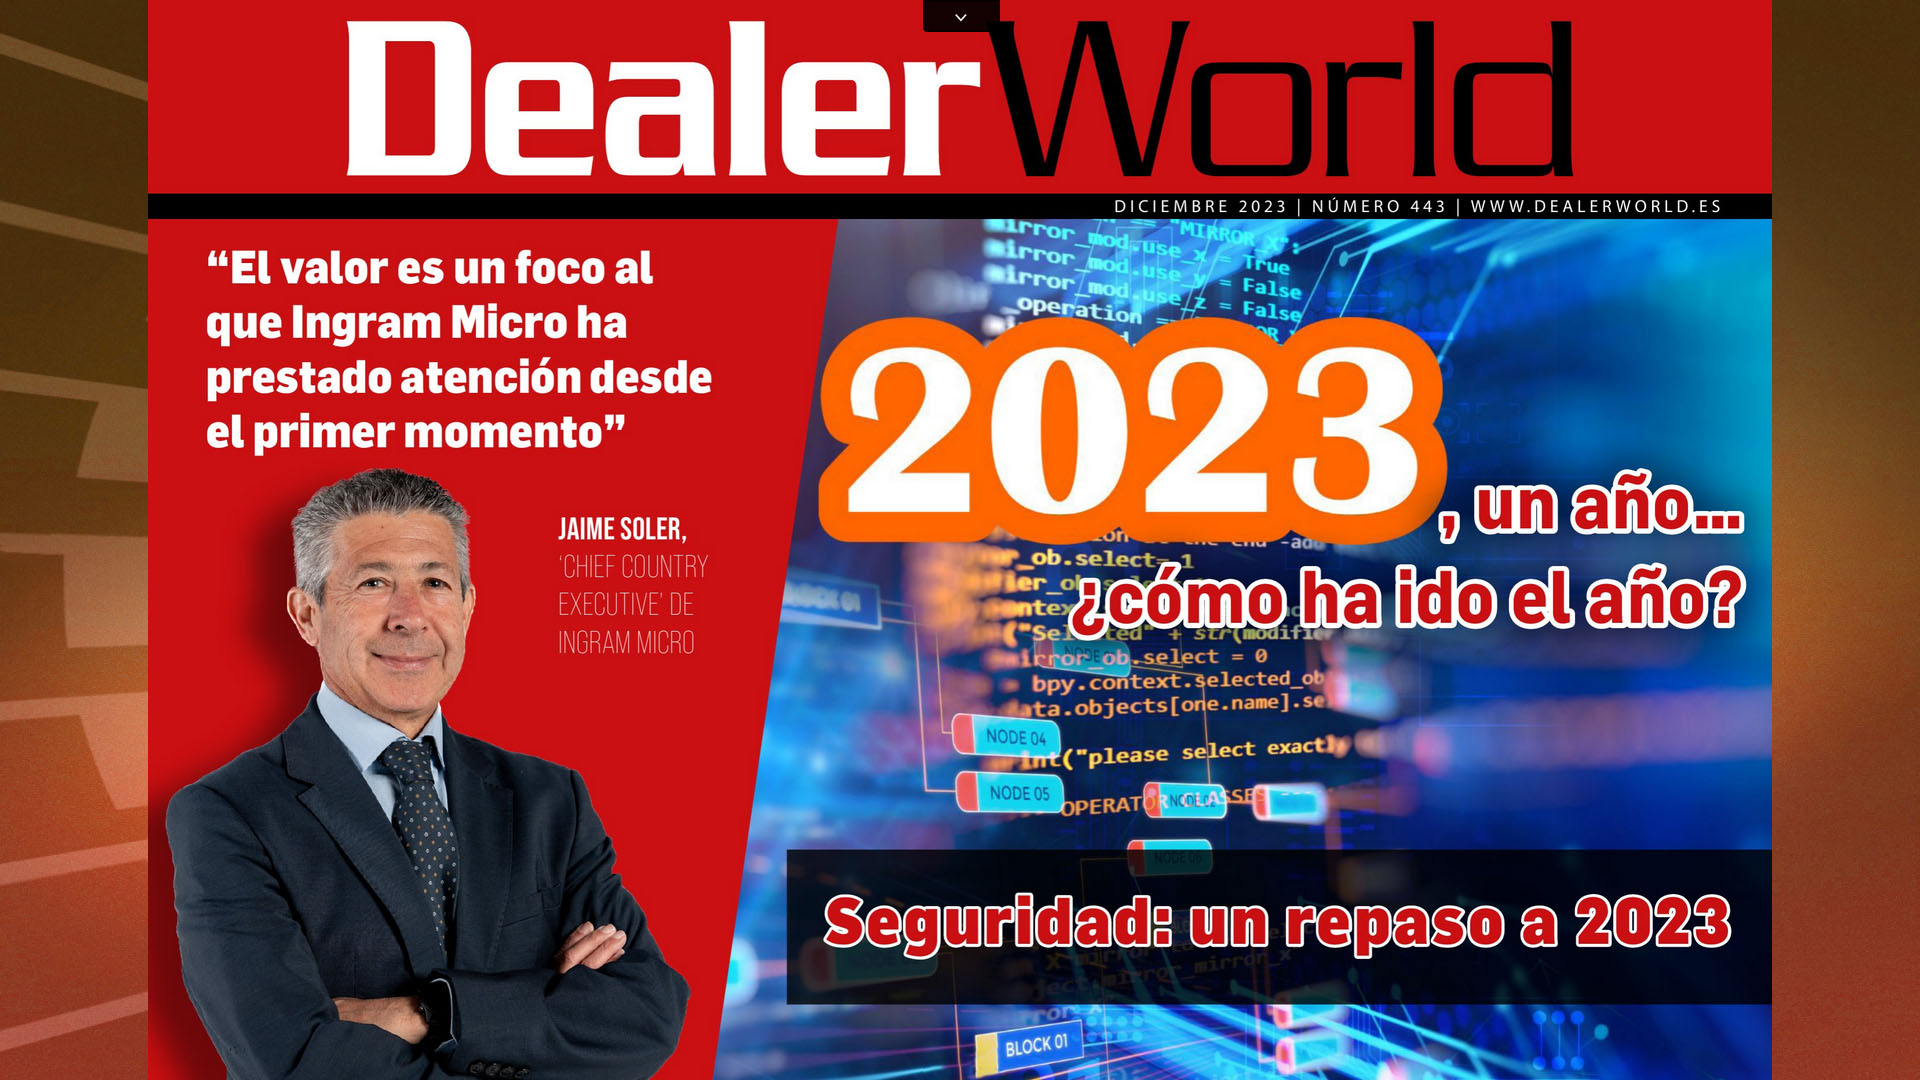 DealerWorld portada diciembre 2023